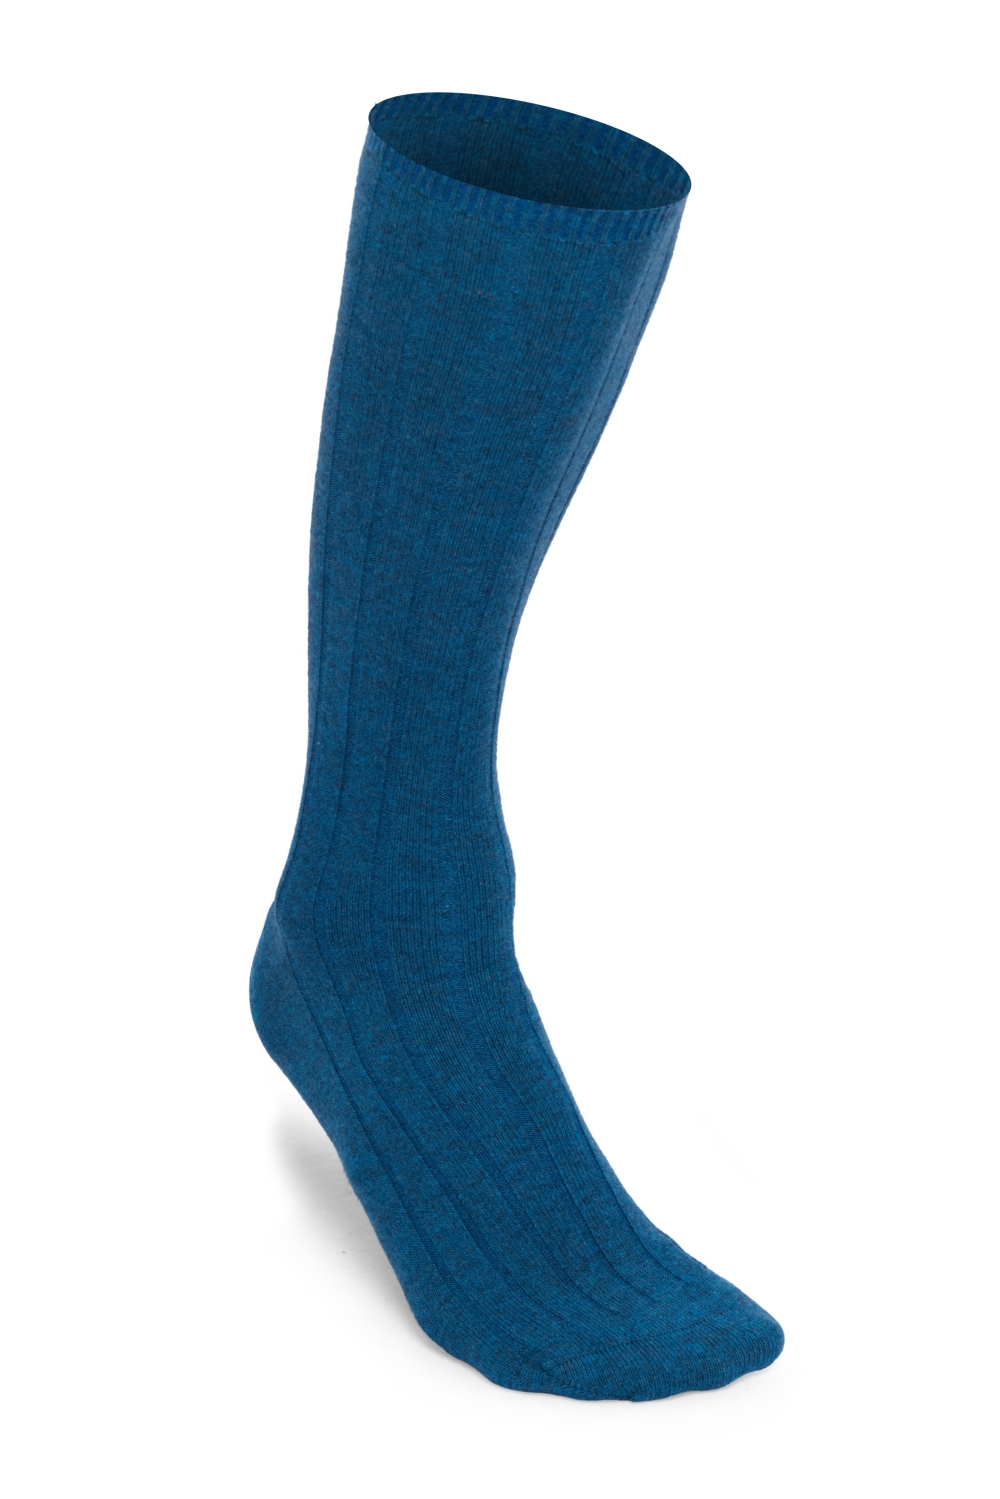 Cashmere accessories socks dragibus long m manor blue 5 5 8 39 42 